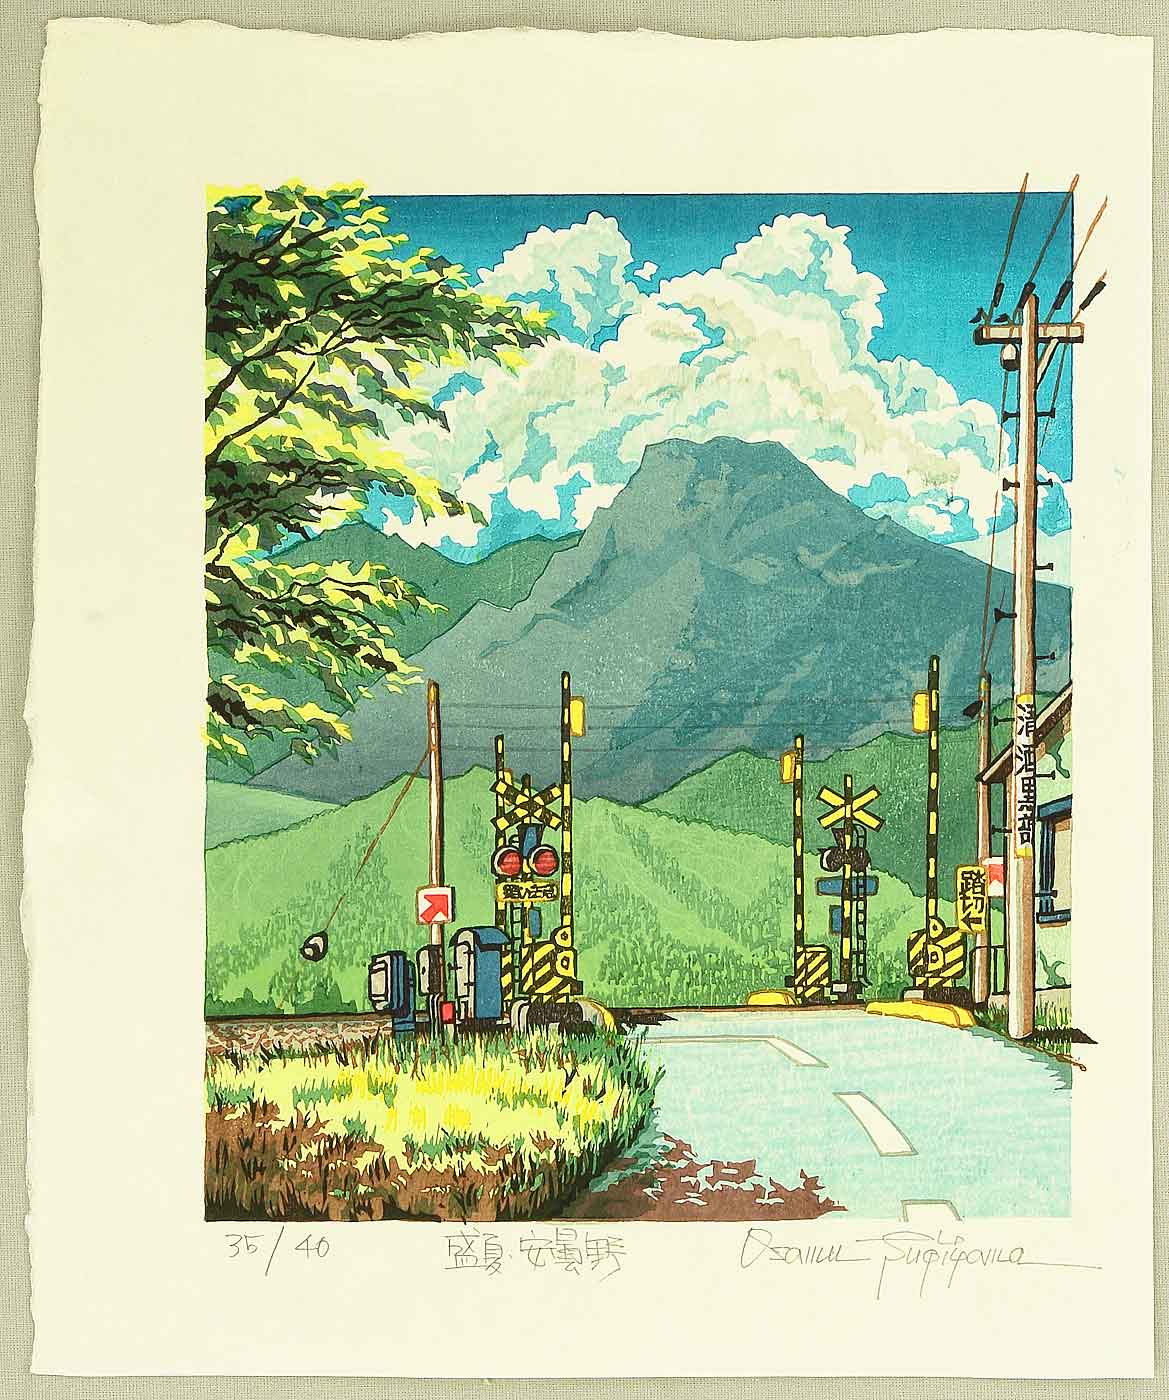 両角修: Midsummer in Azumino Village - Japan - Artelino - 浮世絵検索